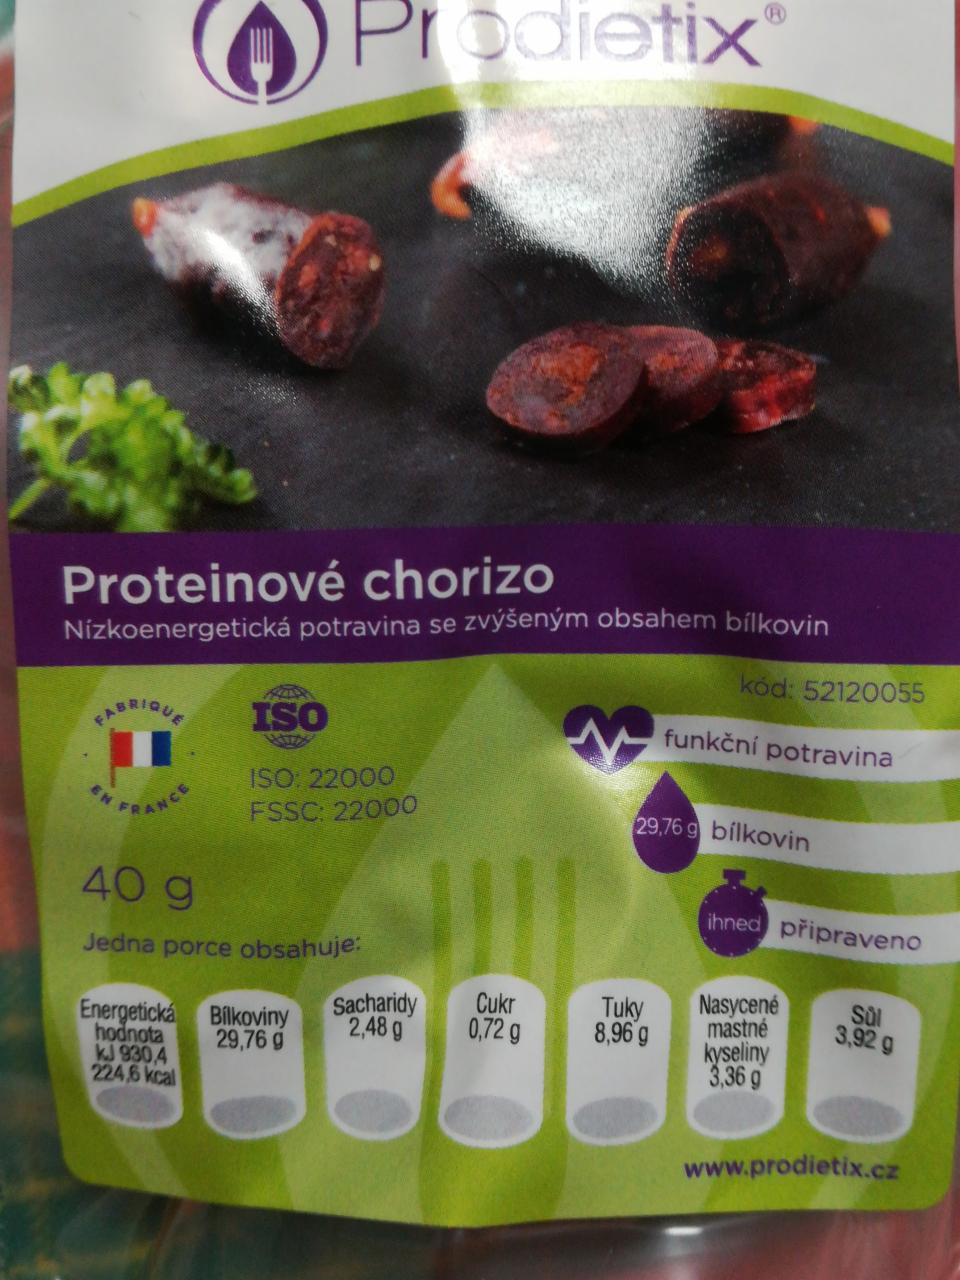 Fotografie - Proteinové chorizo Prodietix